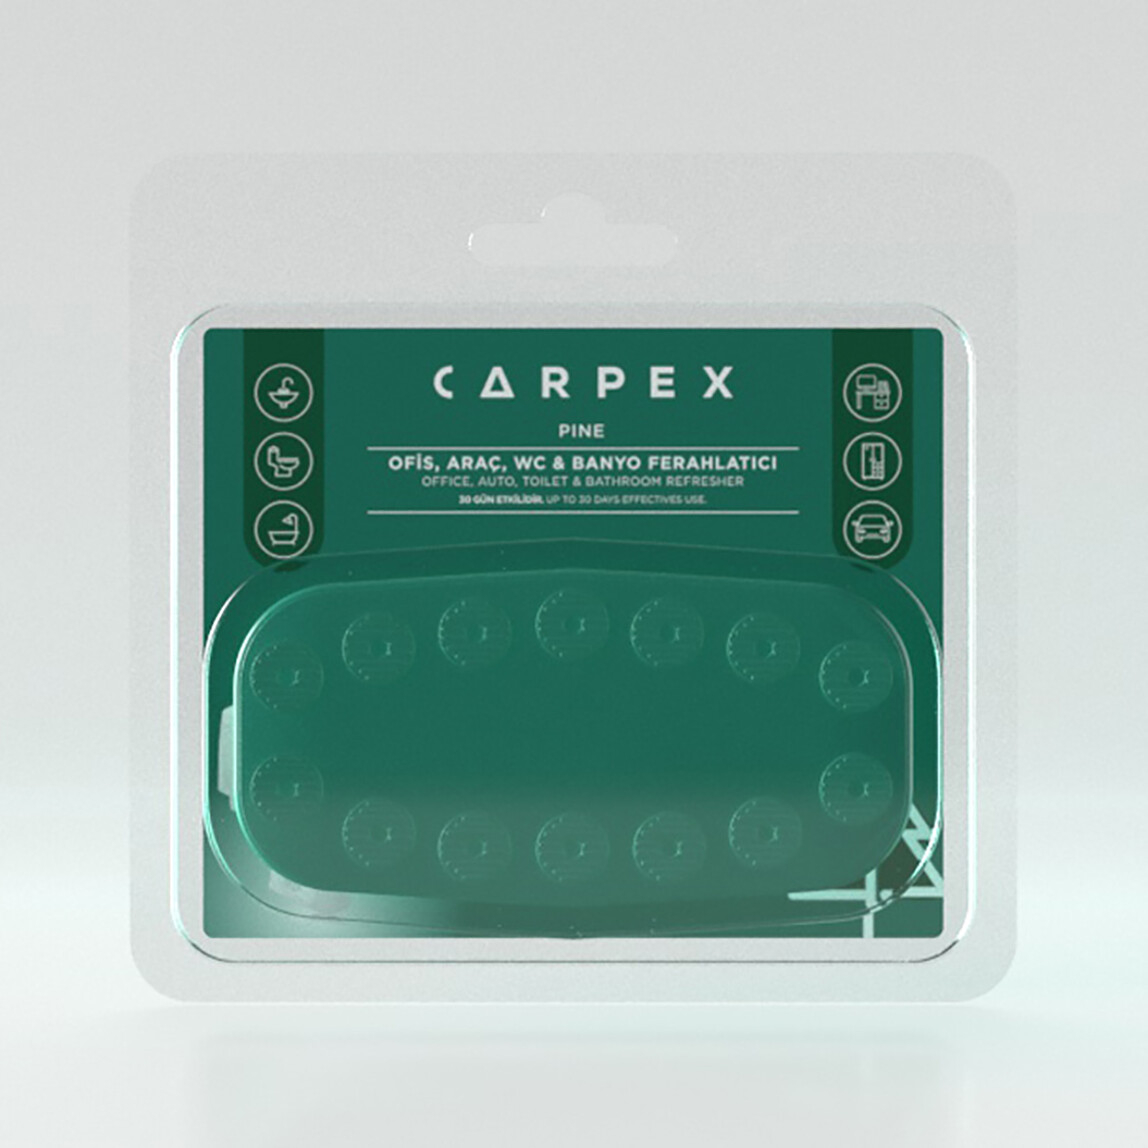    Carpex Wc - Banyo Ferahlatıcı Çam Kokulu  